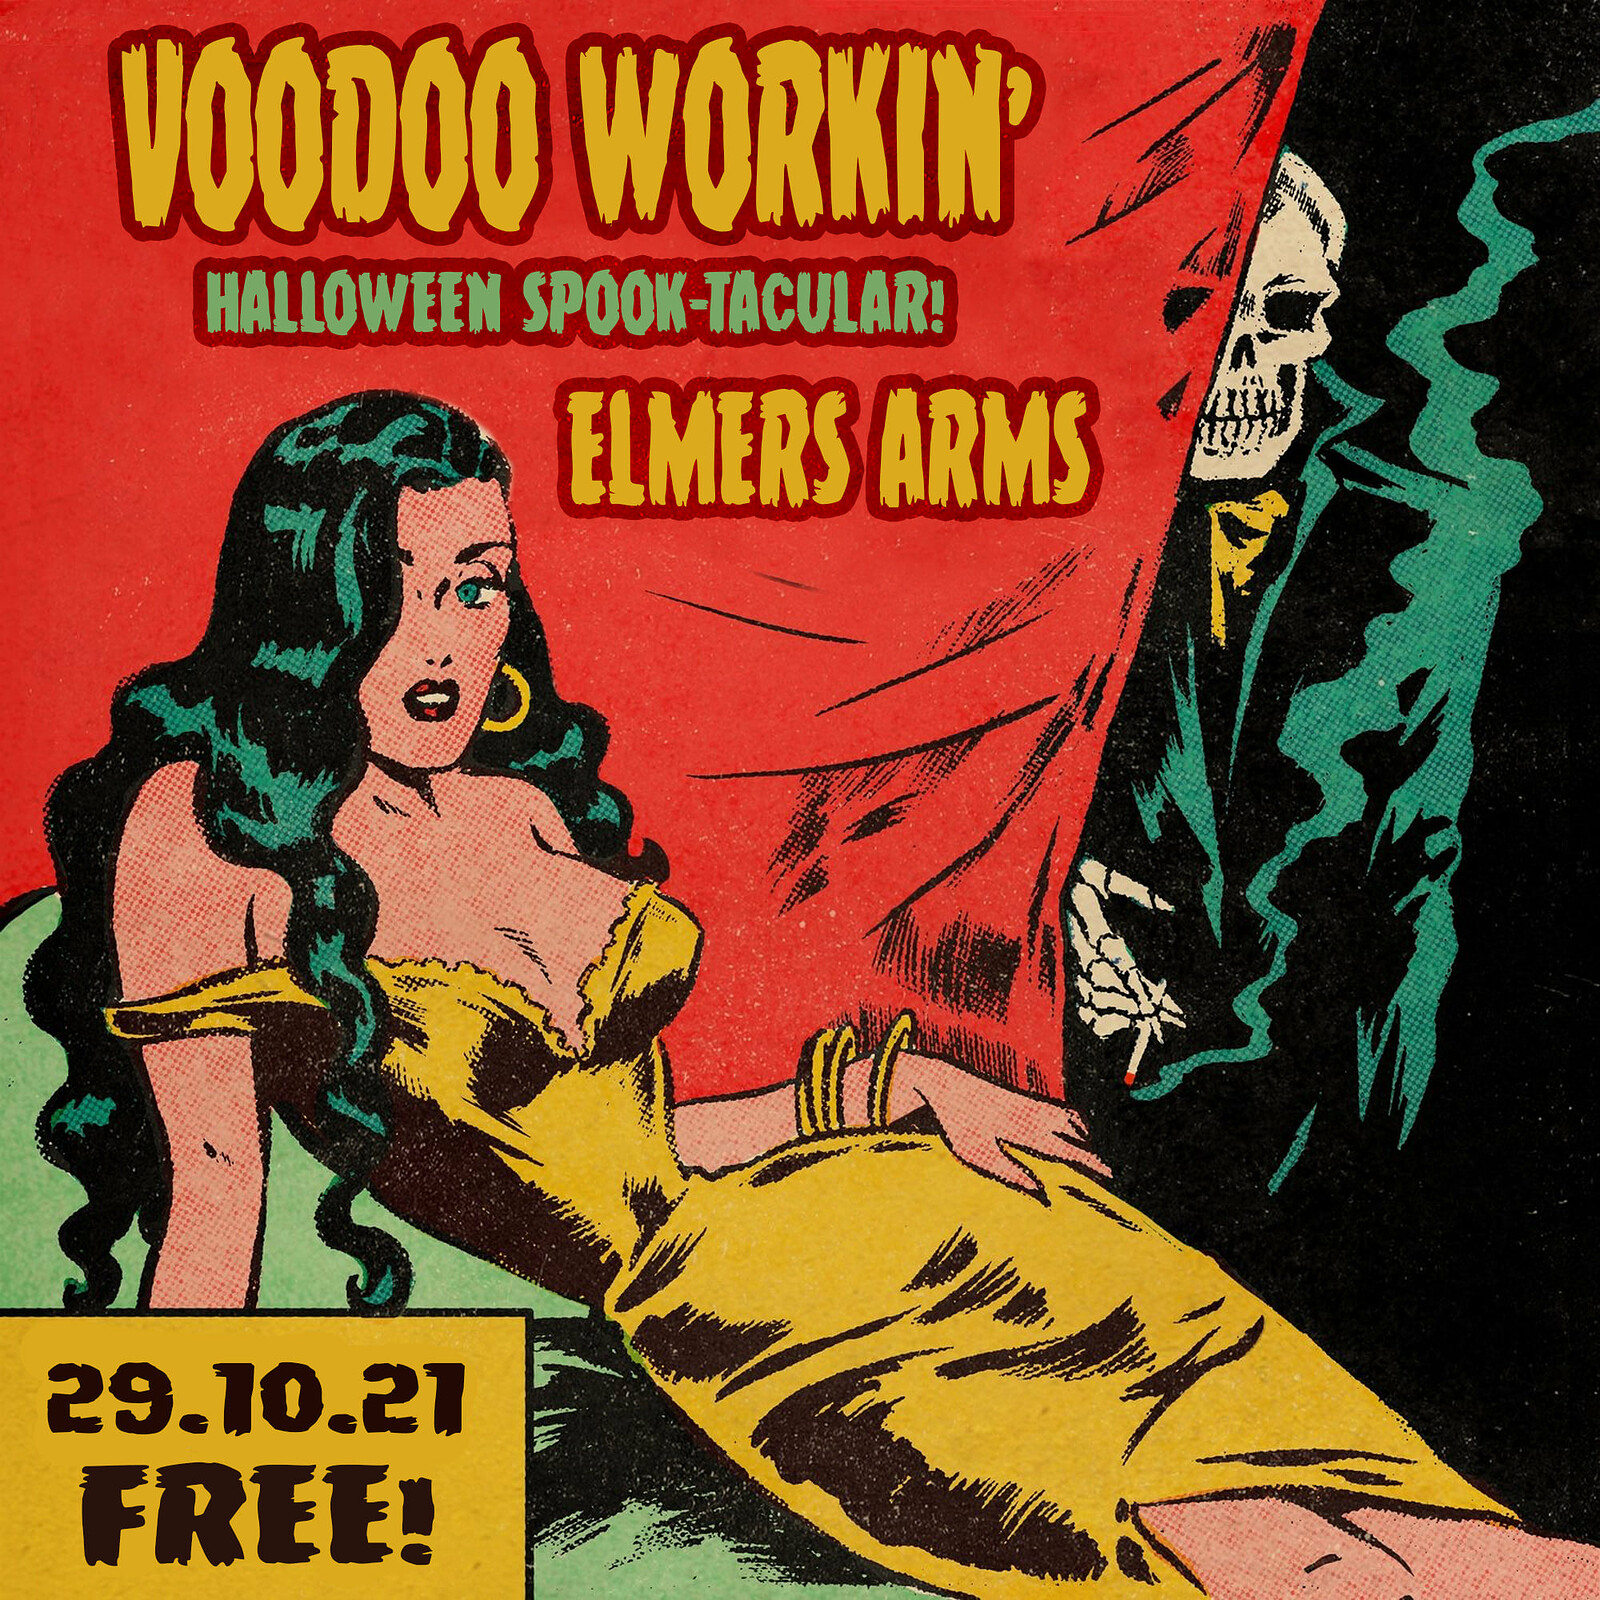 Voodoo Workin' Halloween Spook-Tacular at Elmer's Arms